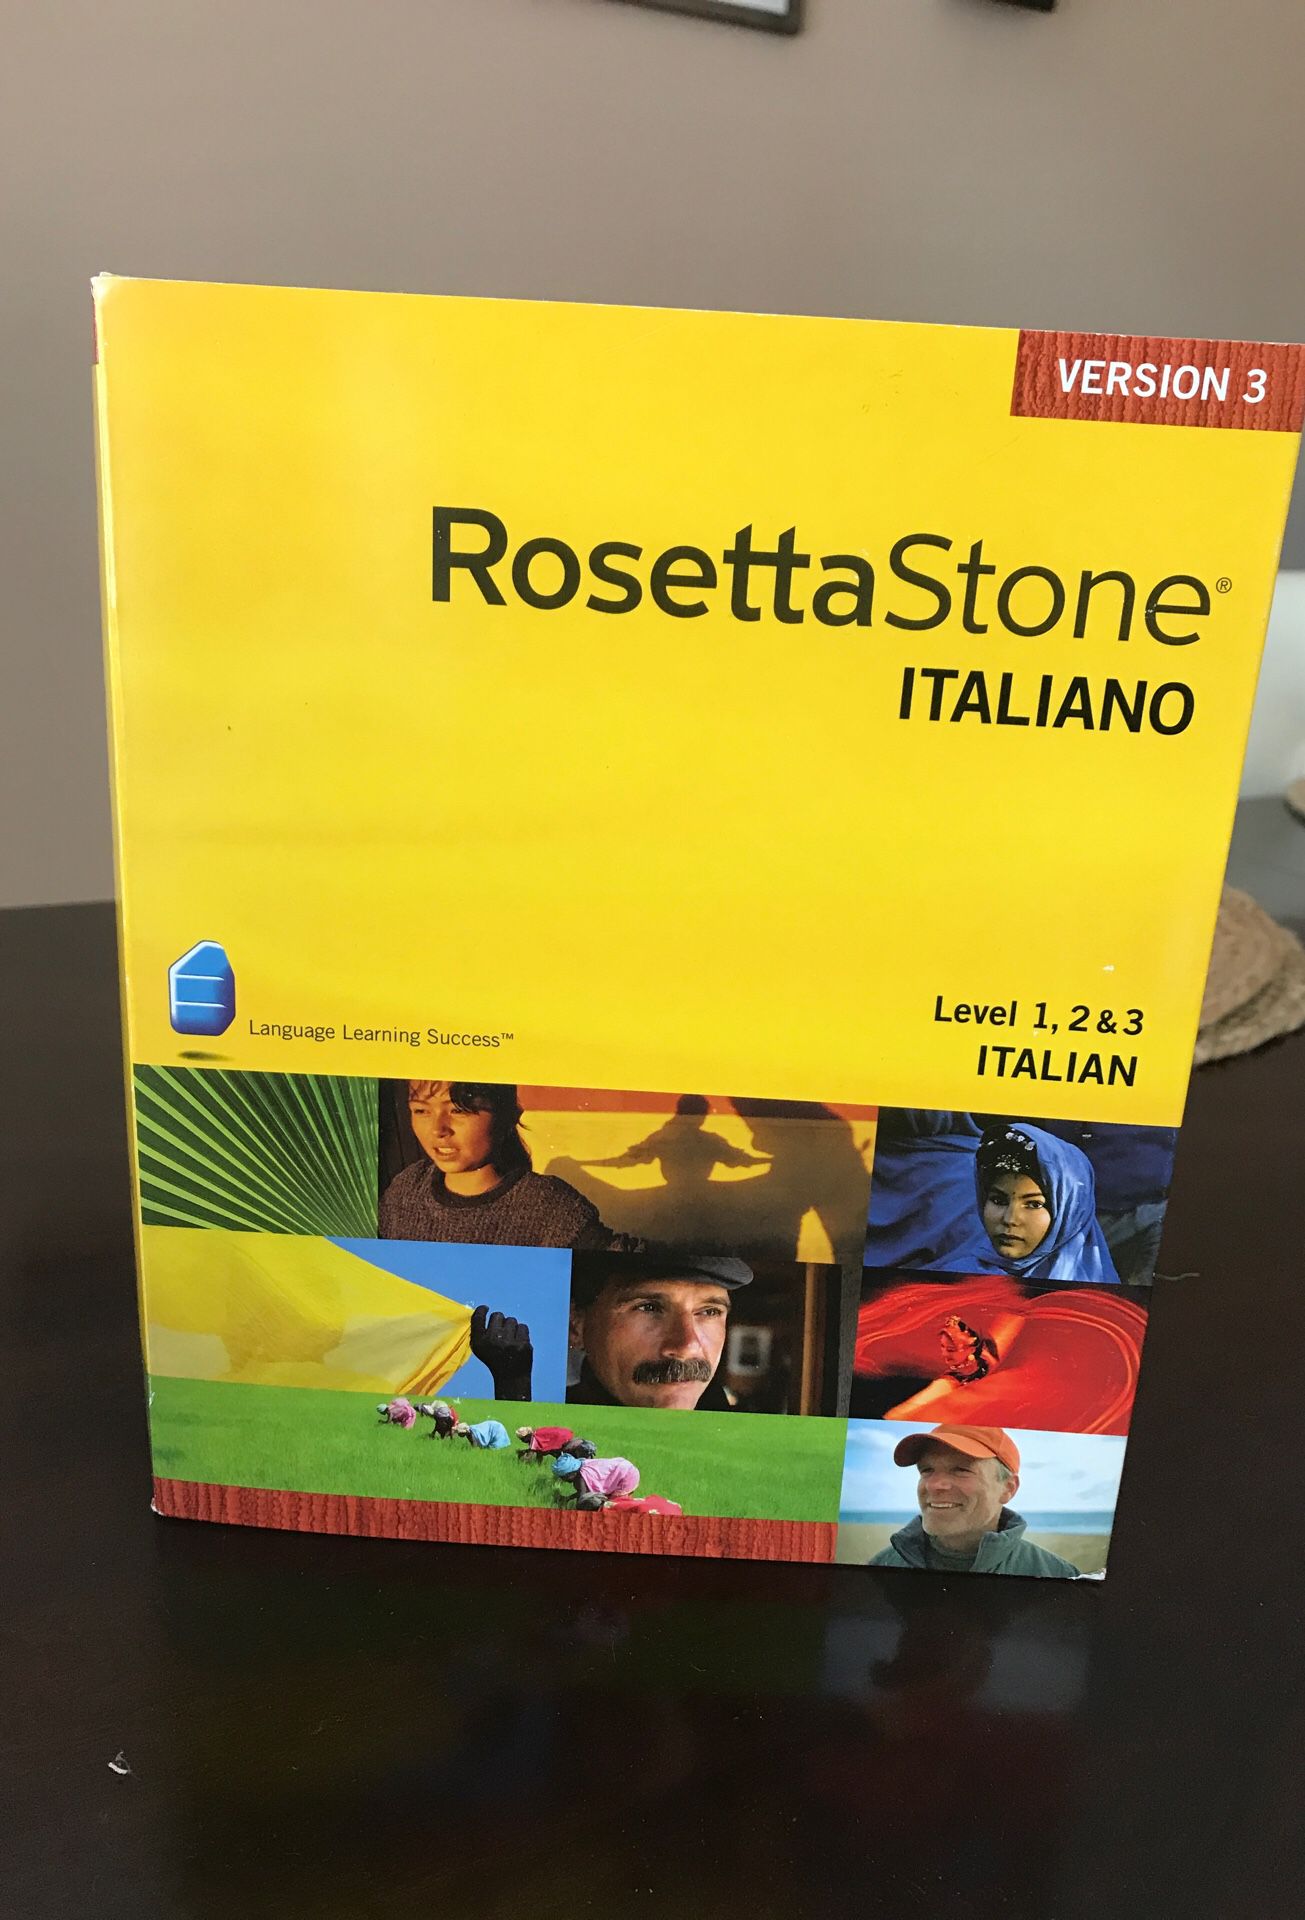 Rosetta Stone “Italiano”